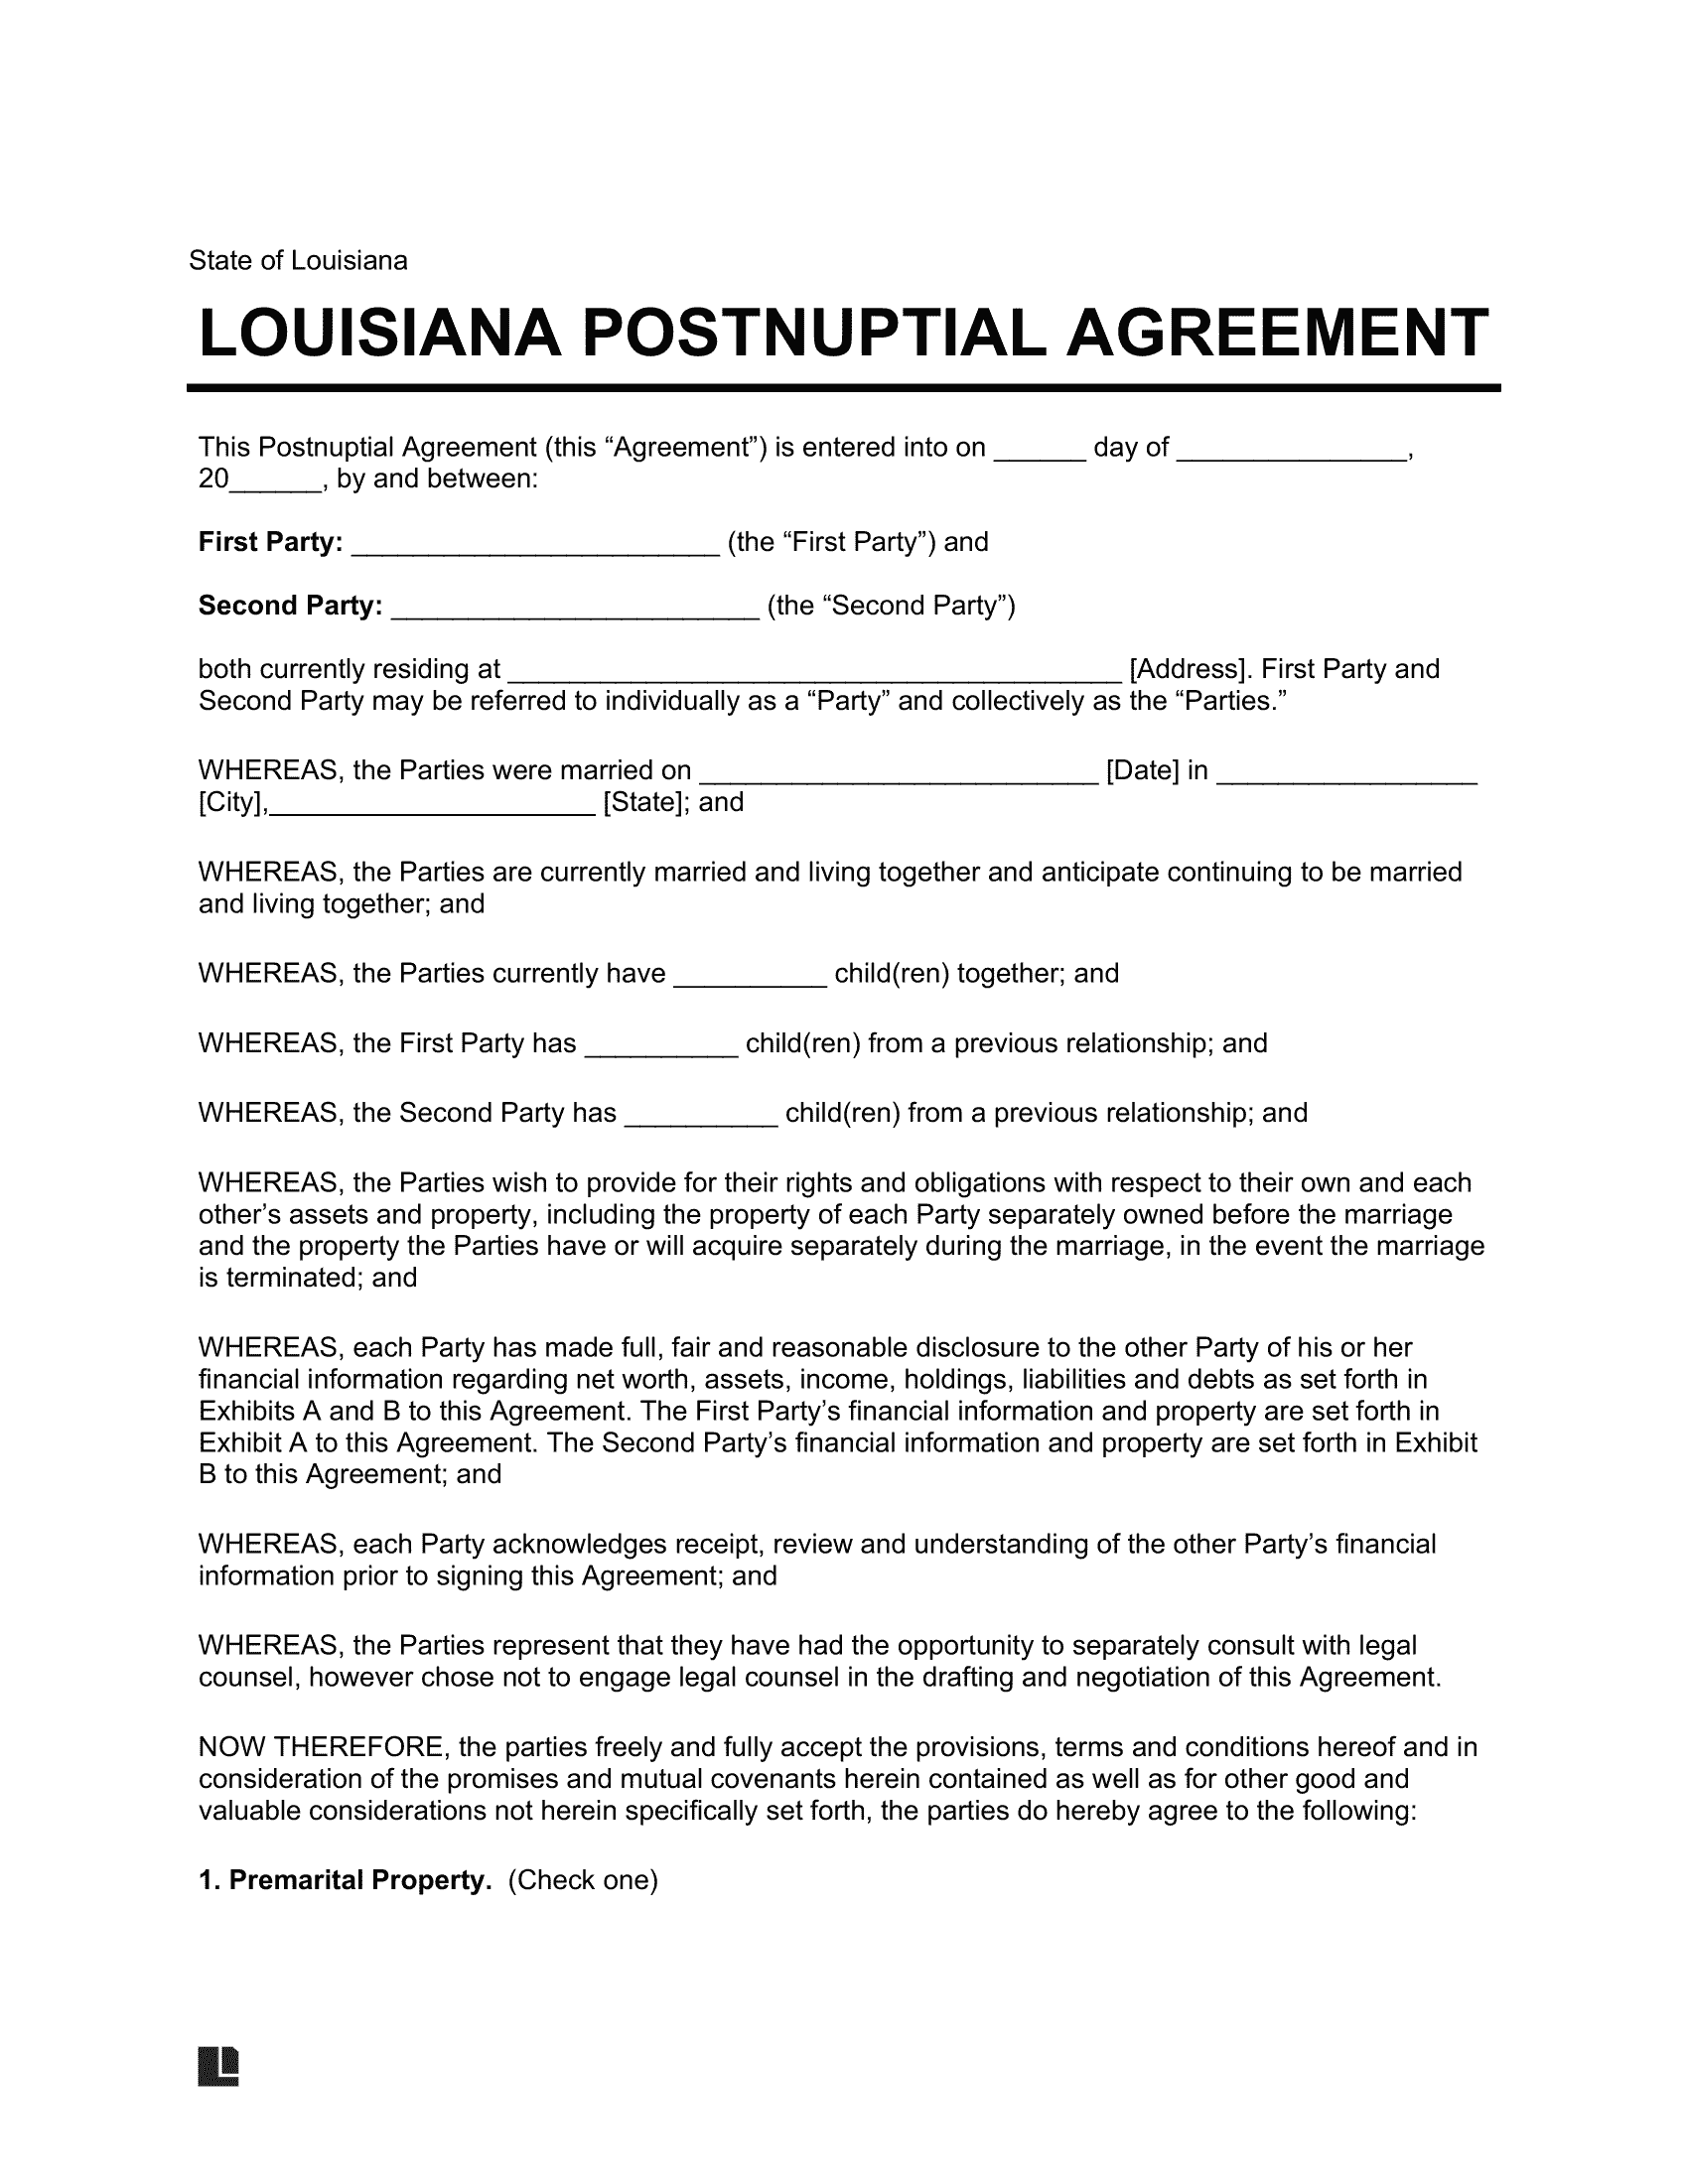 Louisiana Postnuptial Agreement Template